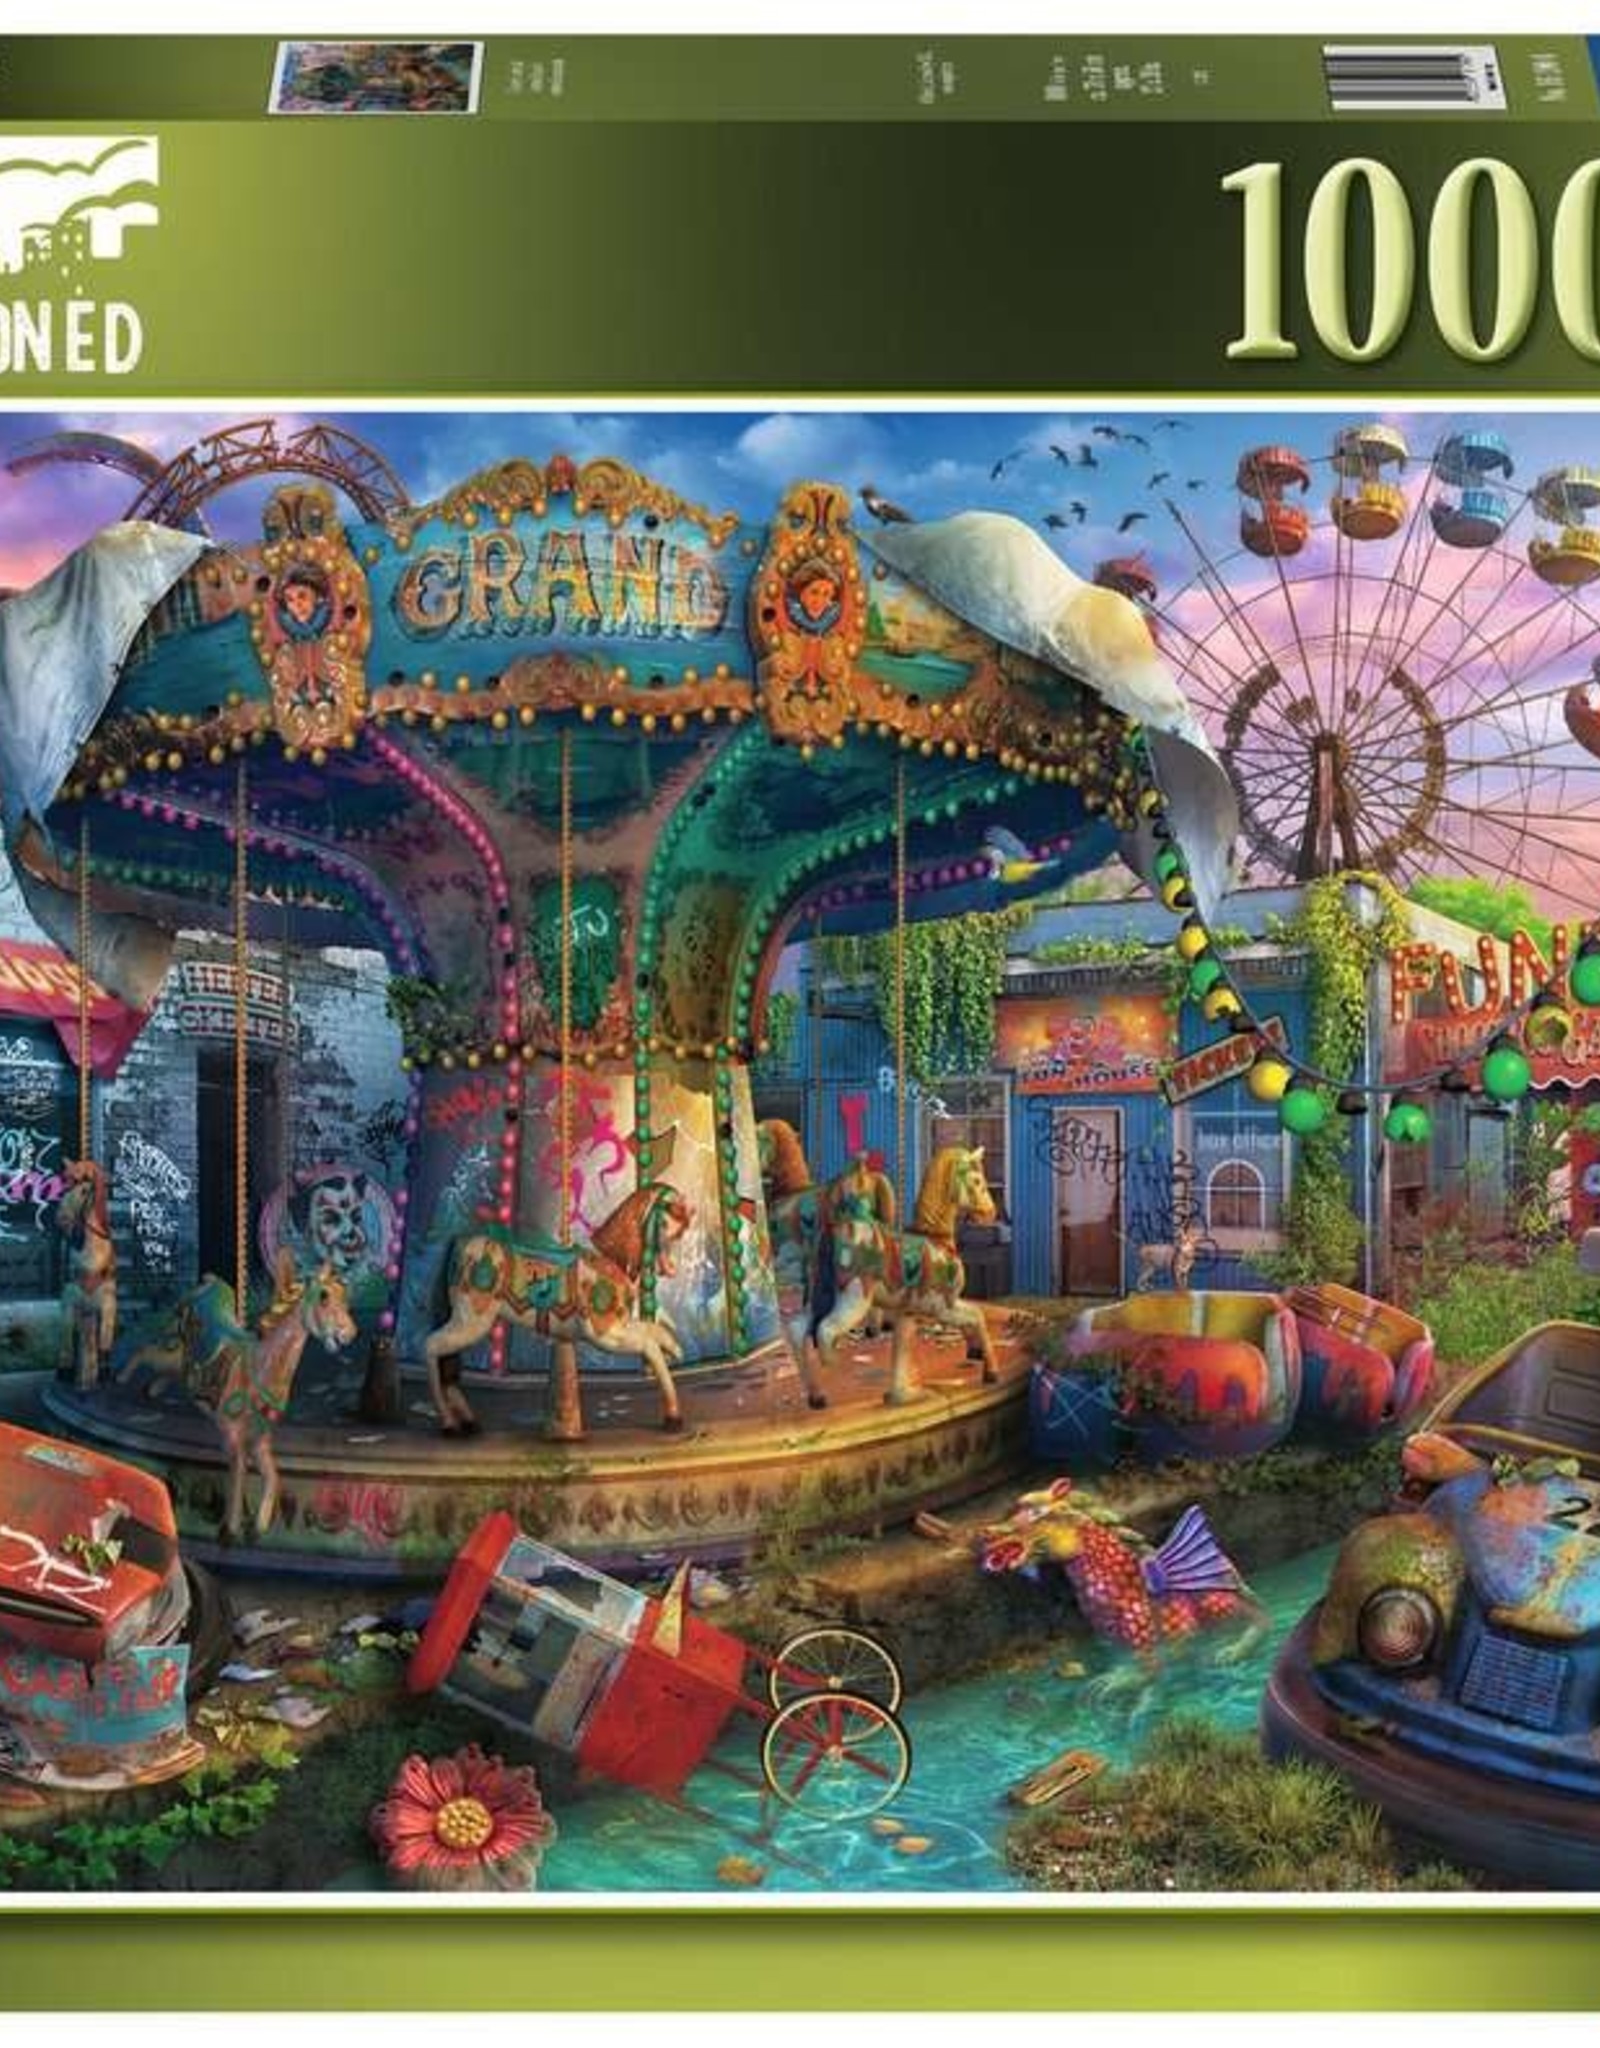 Ravensburger Puzzle 1000pc: Gloomy Carnival